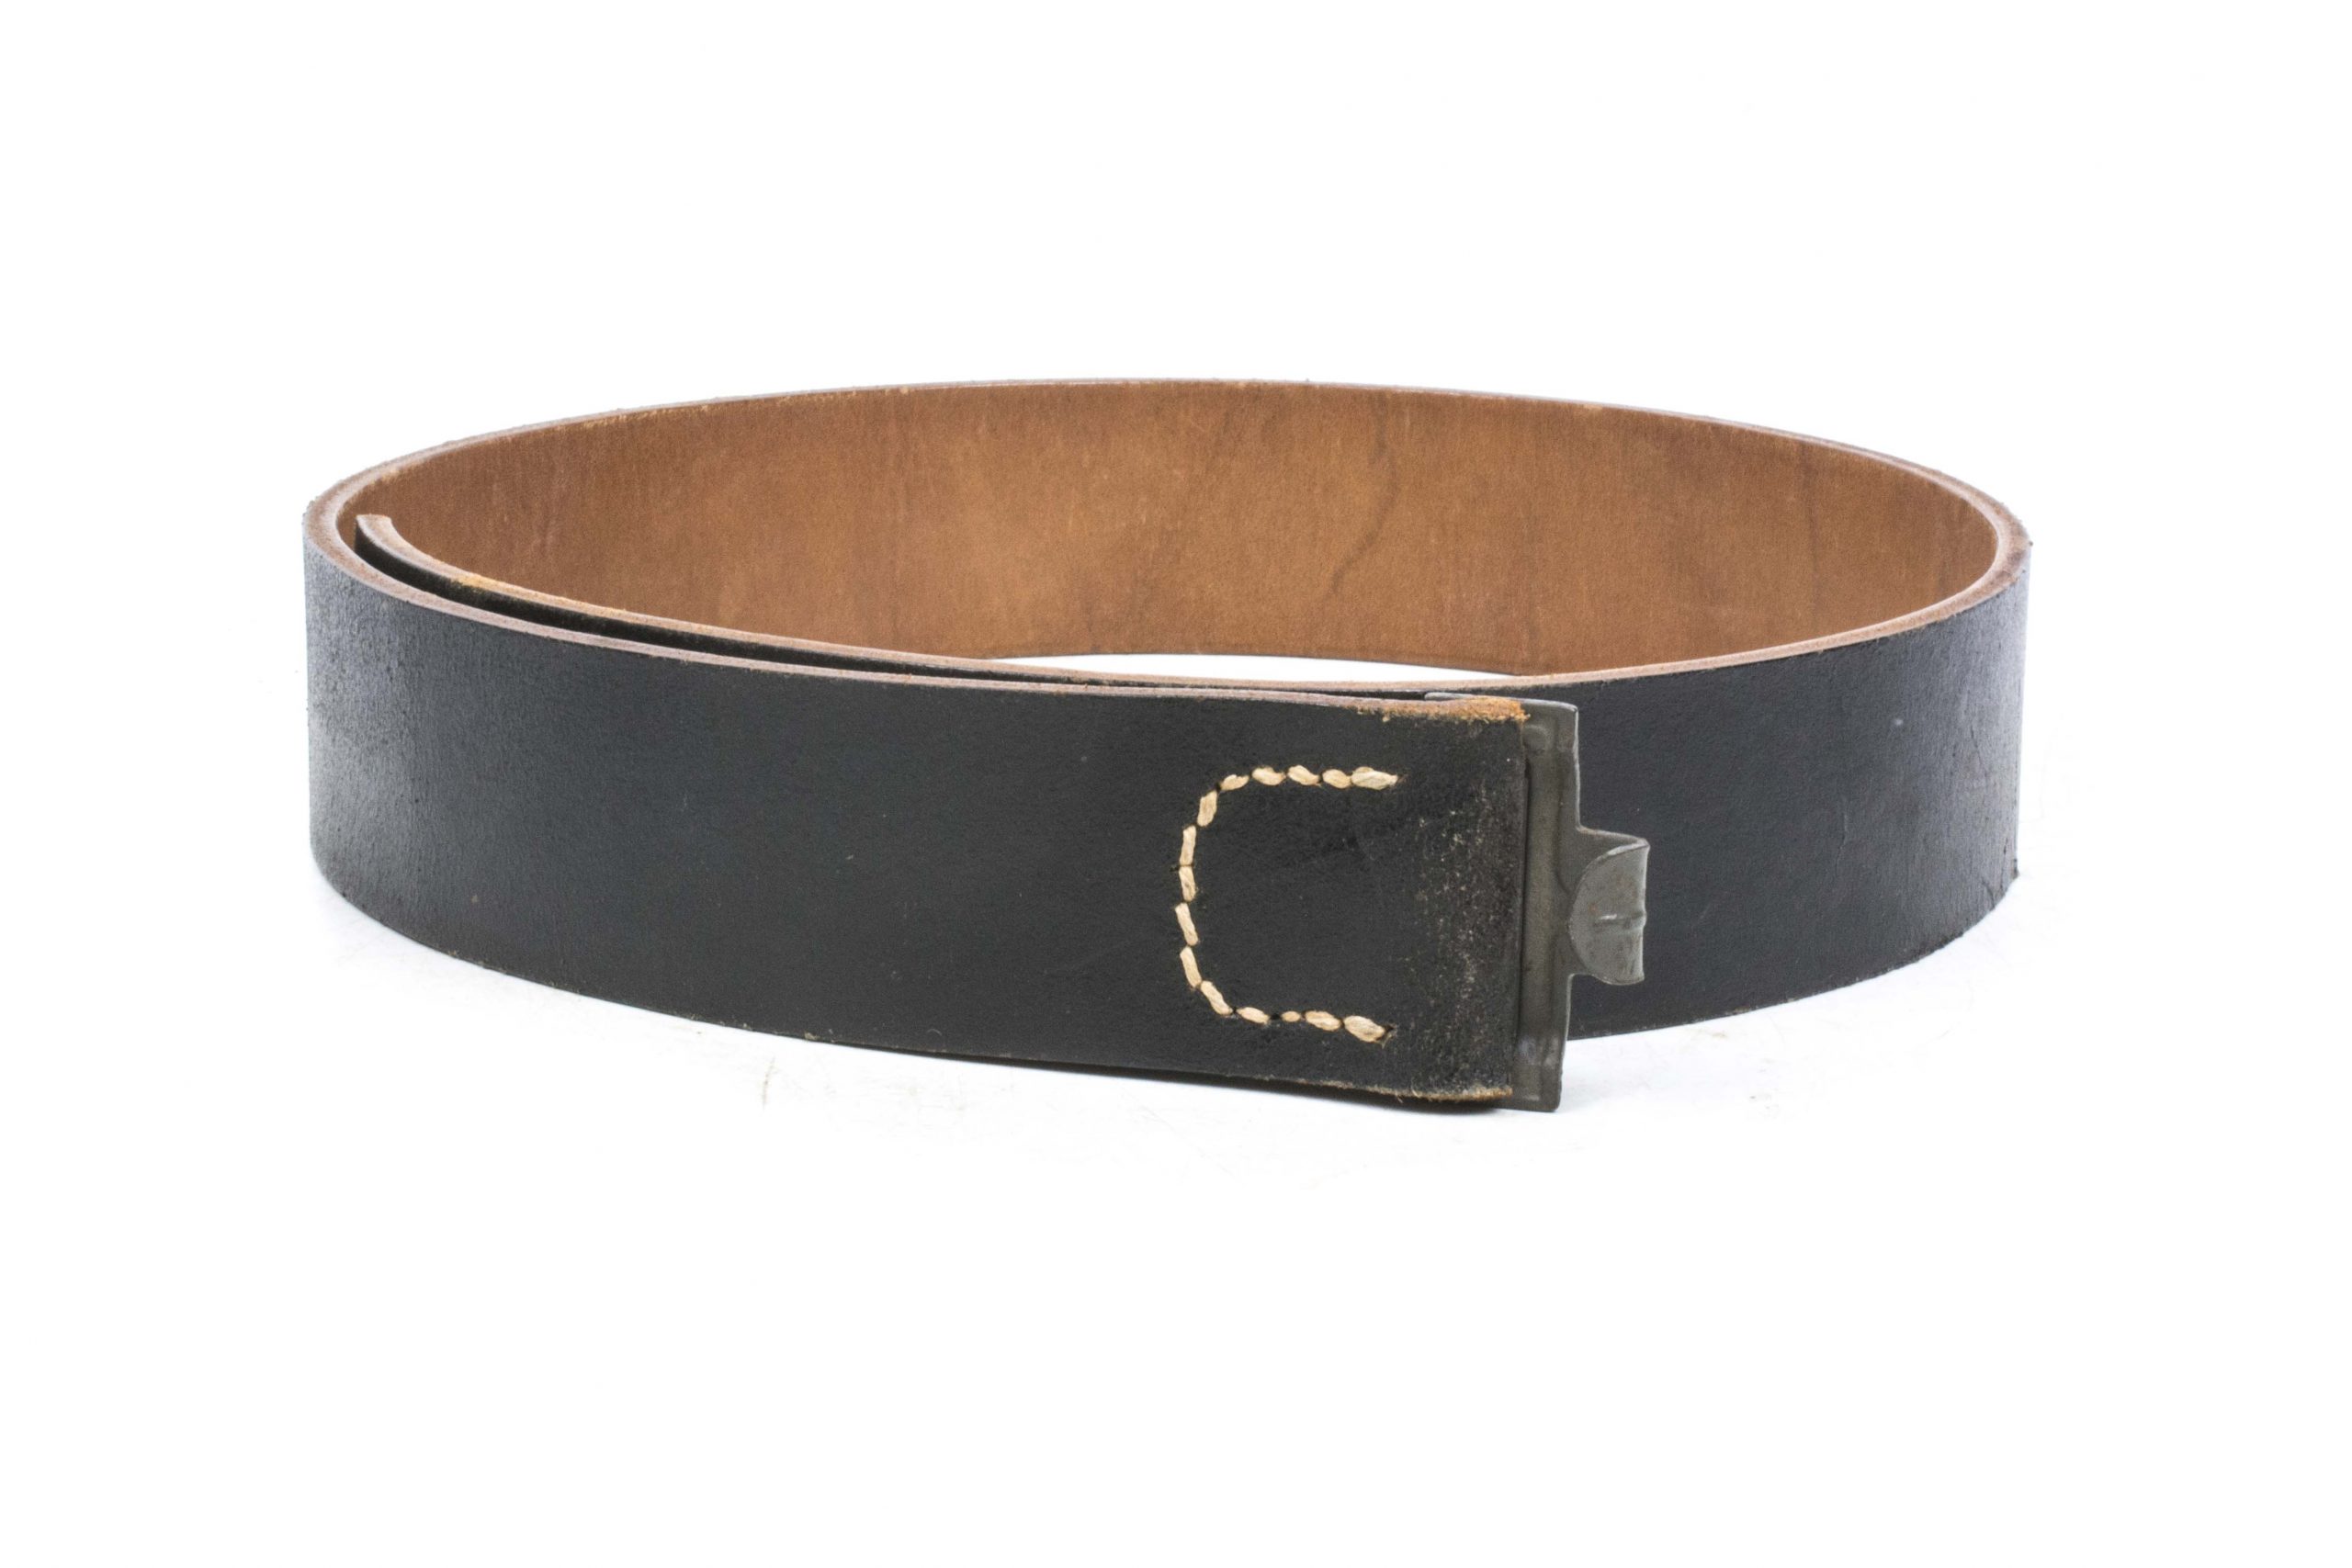 Mint leather equipment belt 0/085/0002 size 90 – fjm44